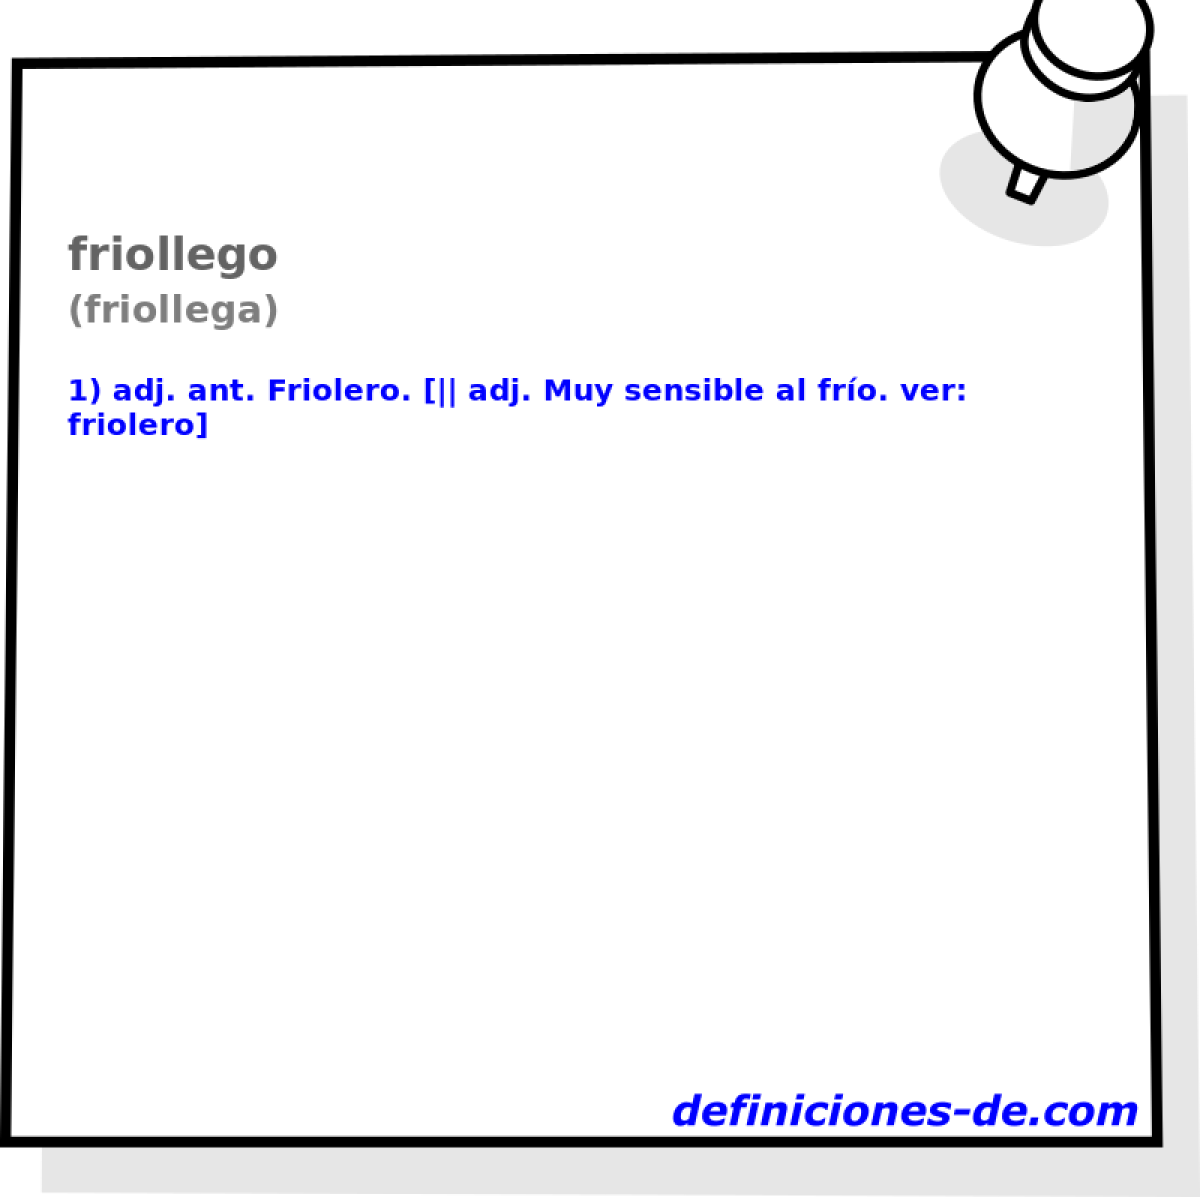 friollego (friollega)